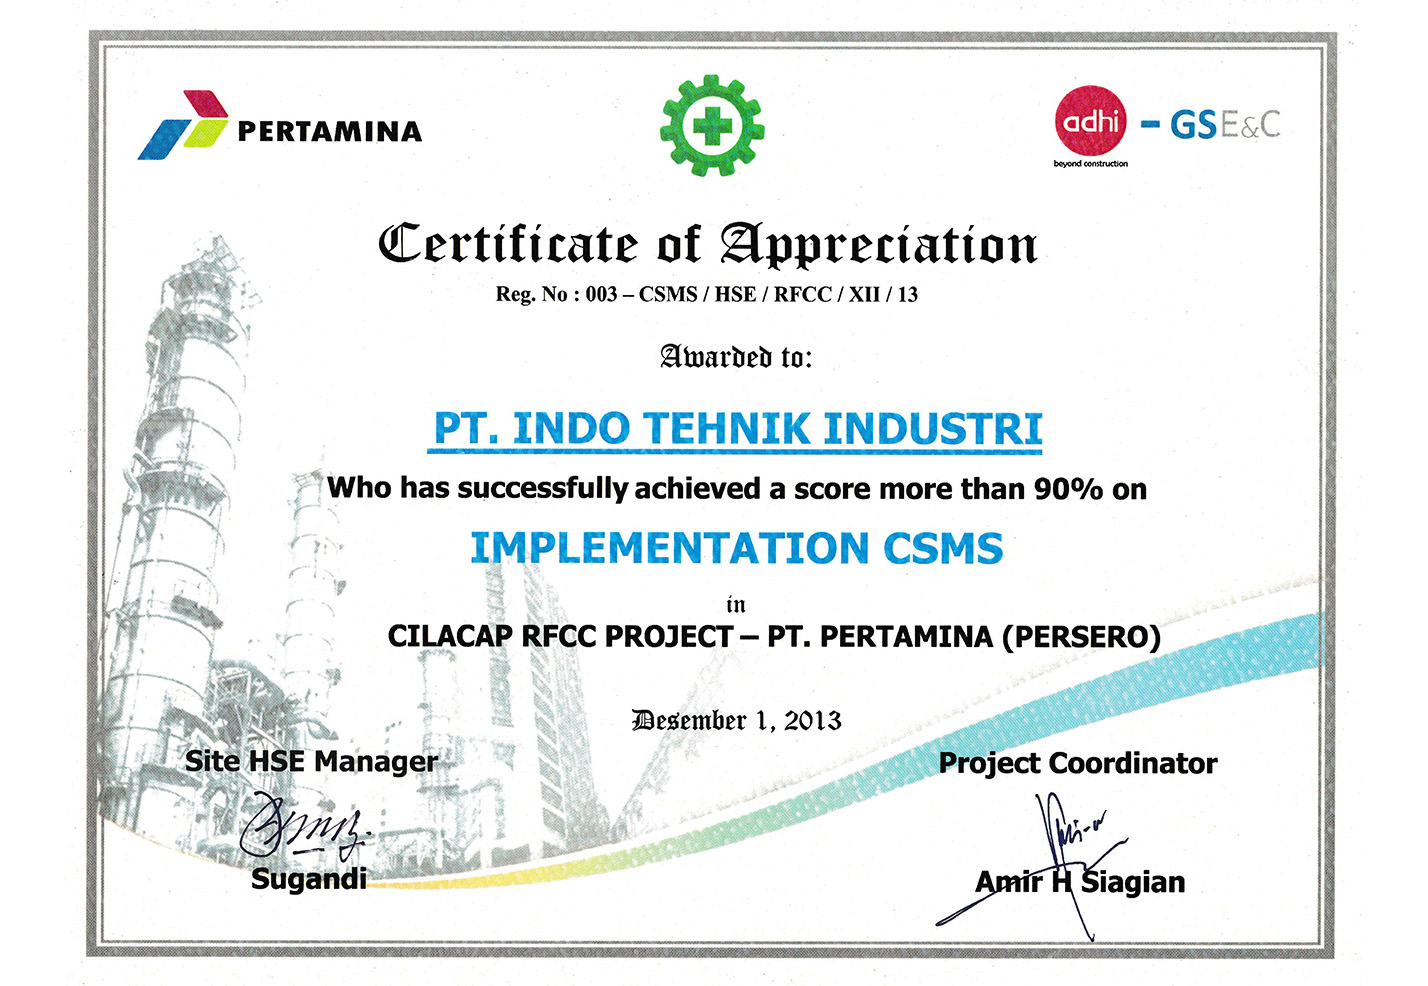 PT.Pertamina Appreciation Award Certificate For Cilacap RFCC Project